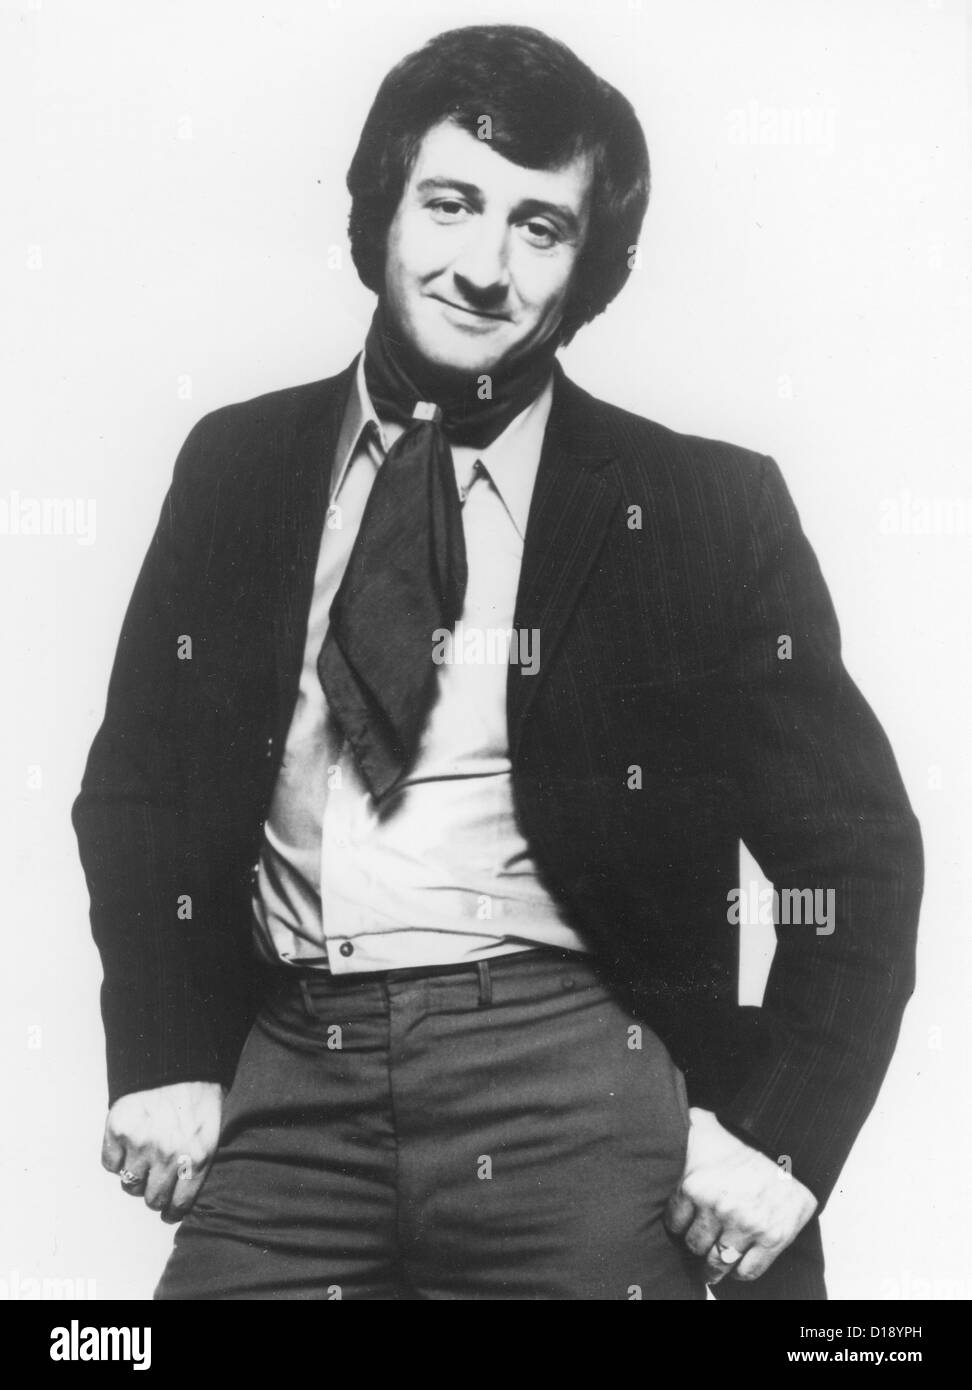 TONY CHRISTIE  Promotional photo of UK singer about 1972 Stock Photo